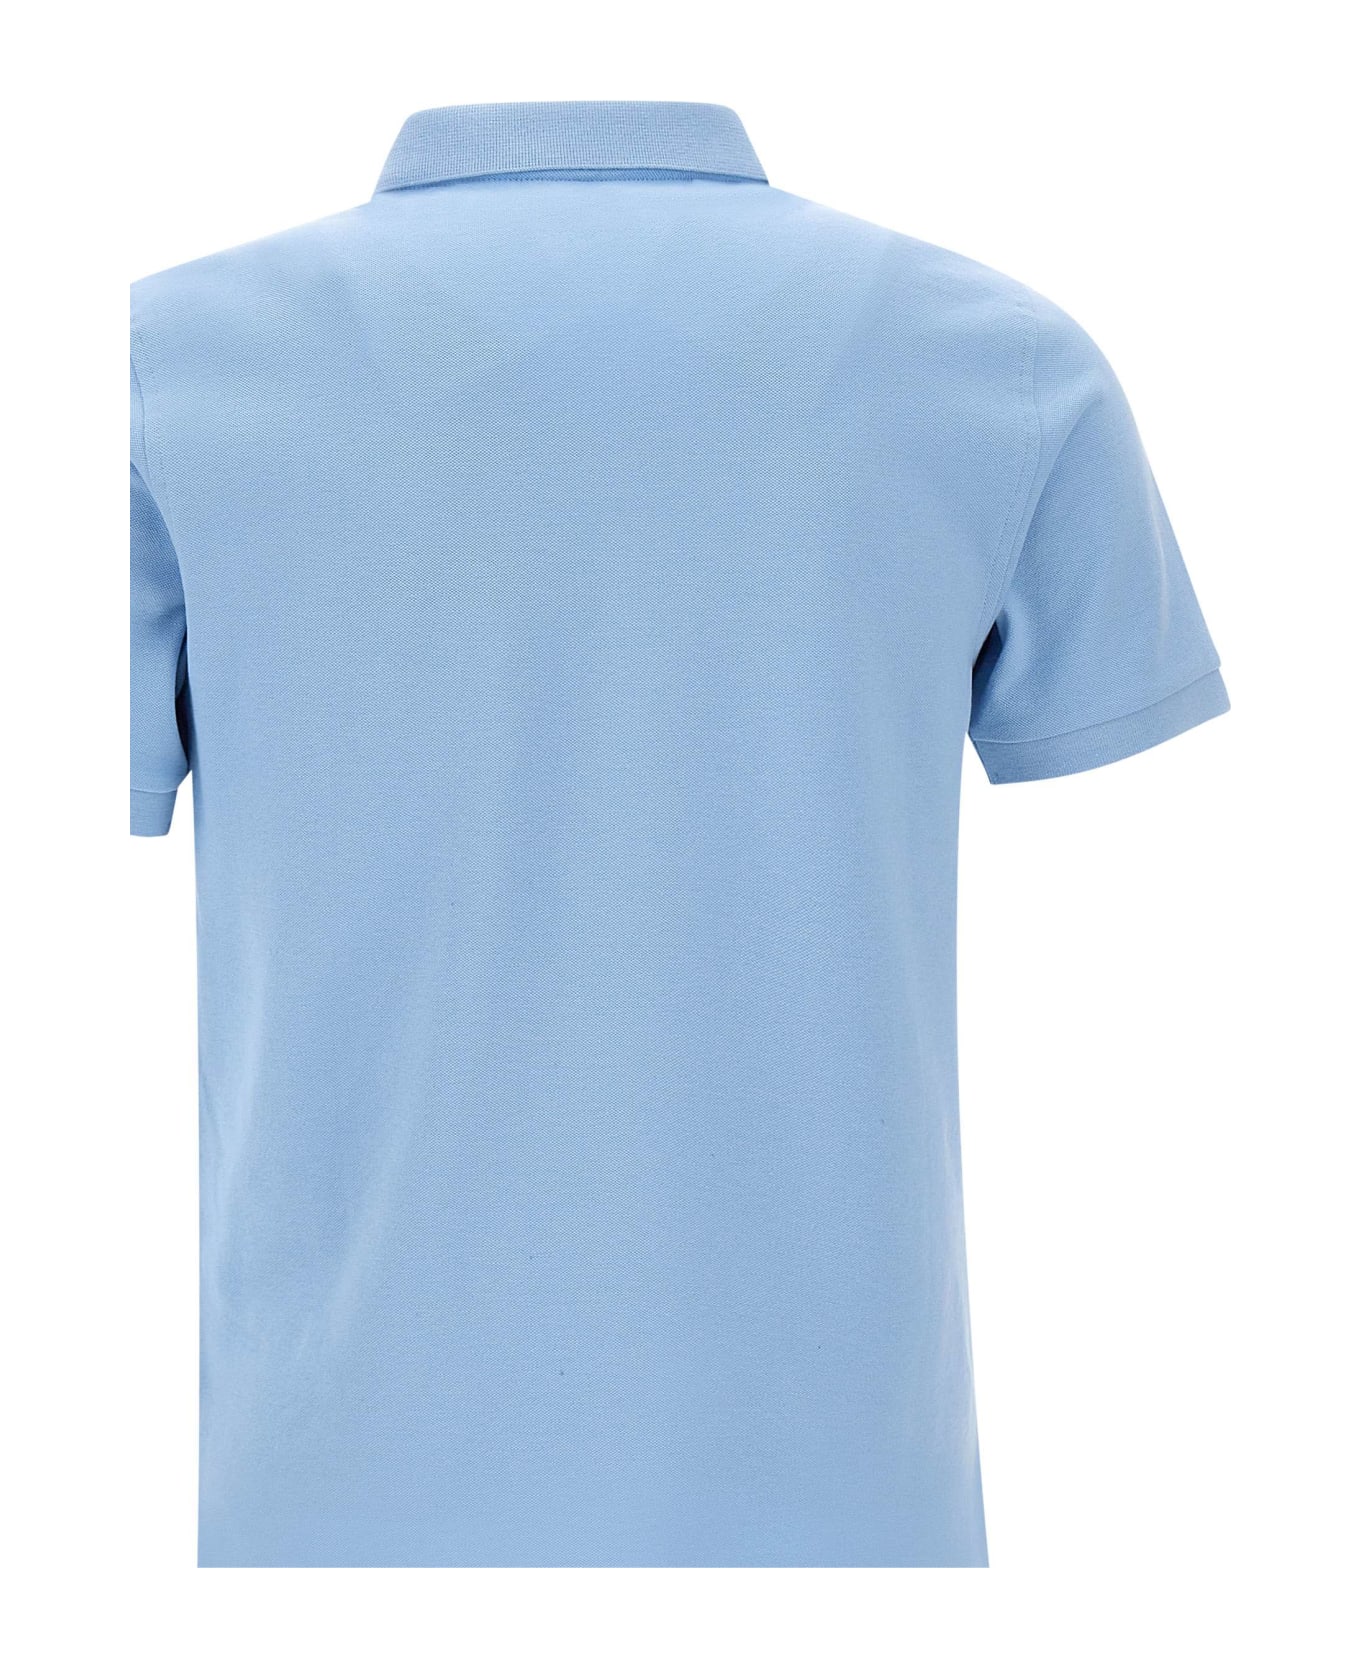 Fay Cotton Polo Shirt - Azzurro